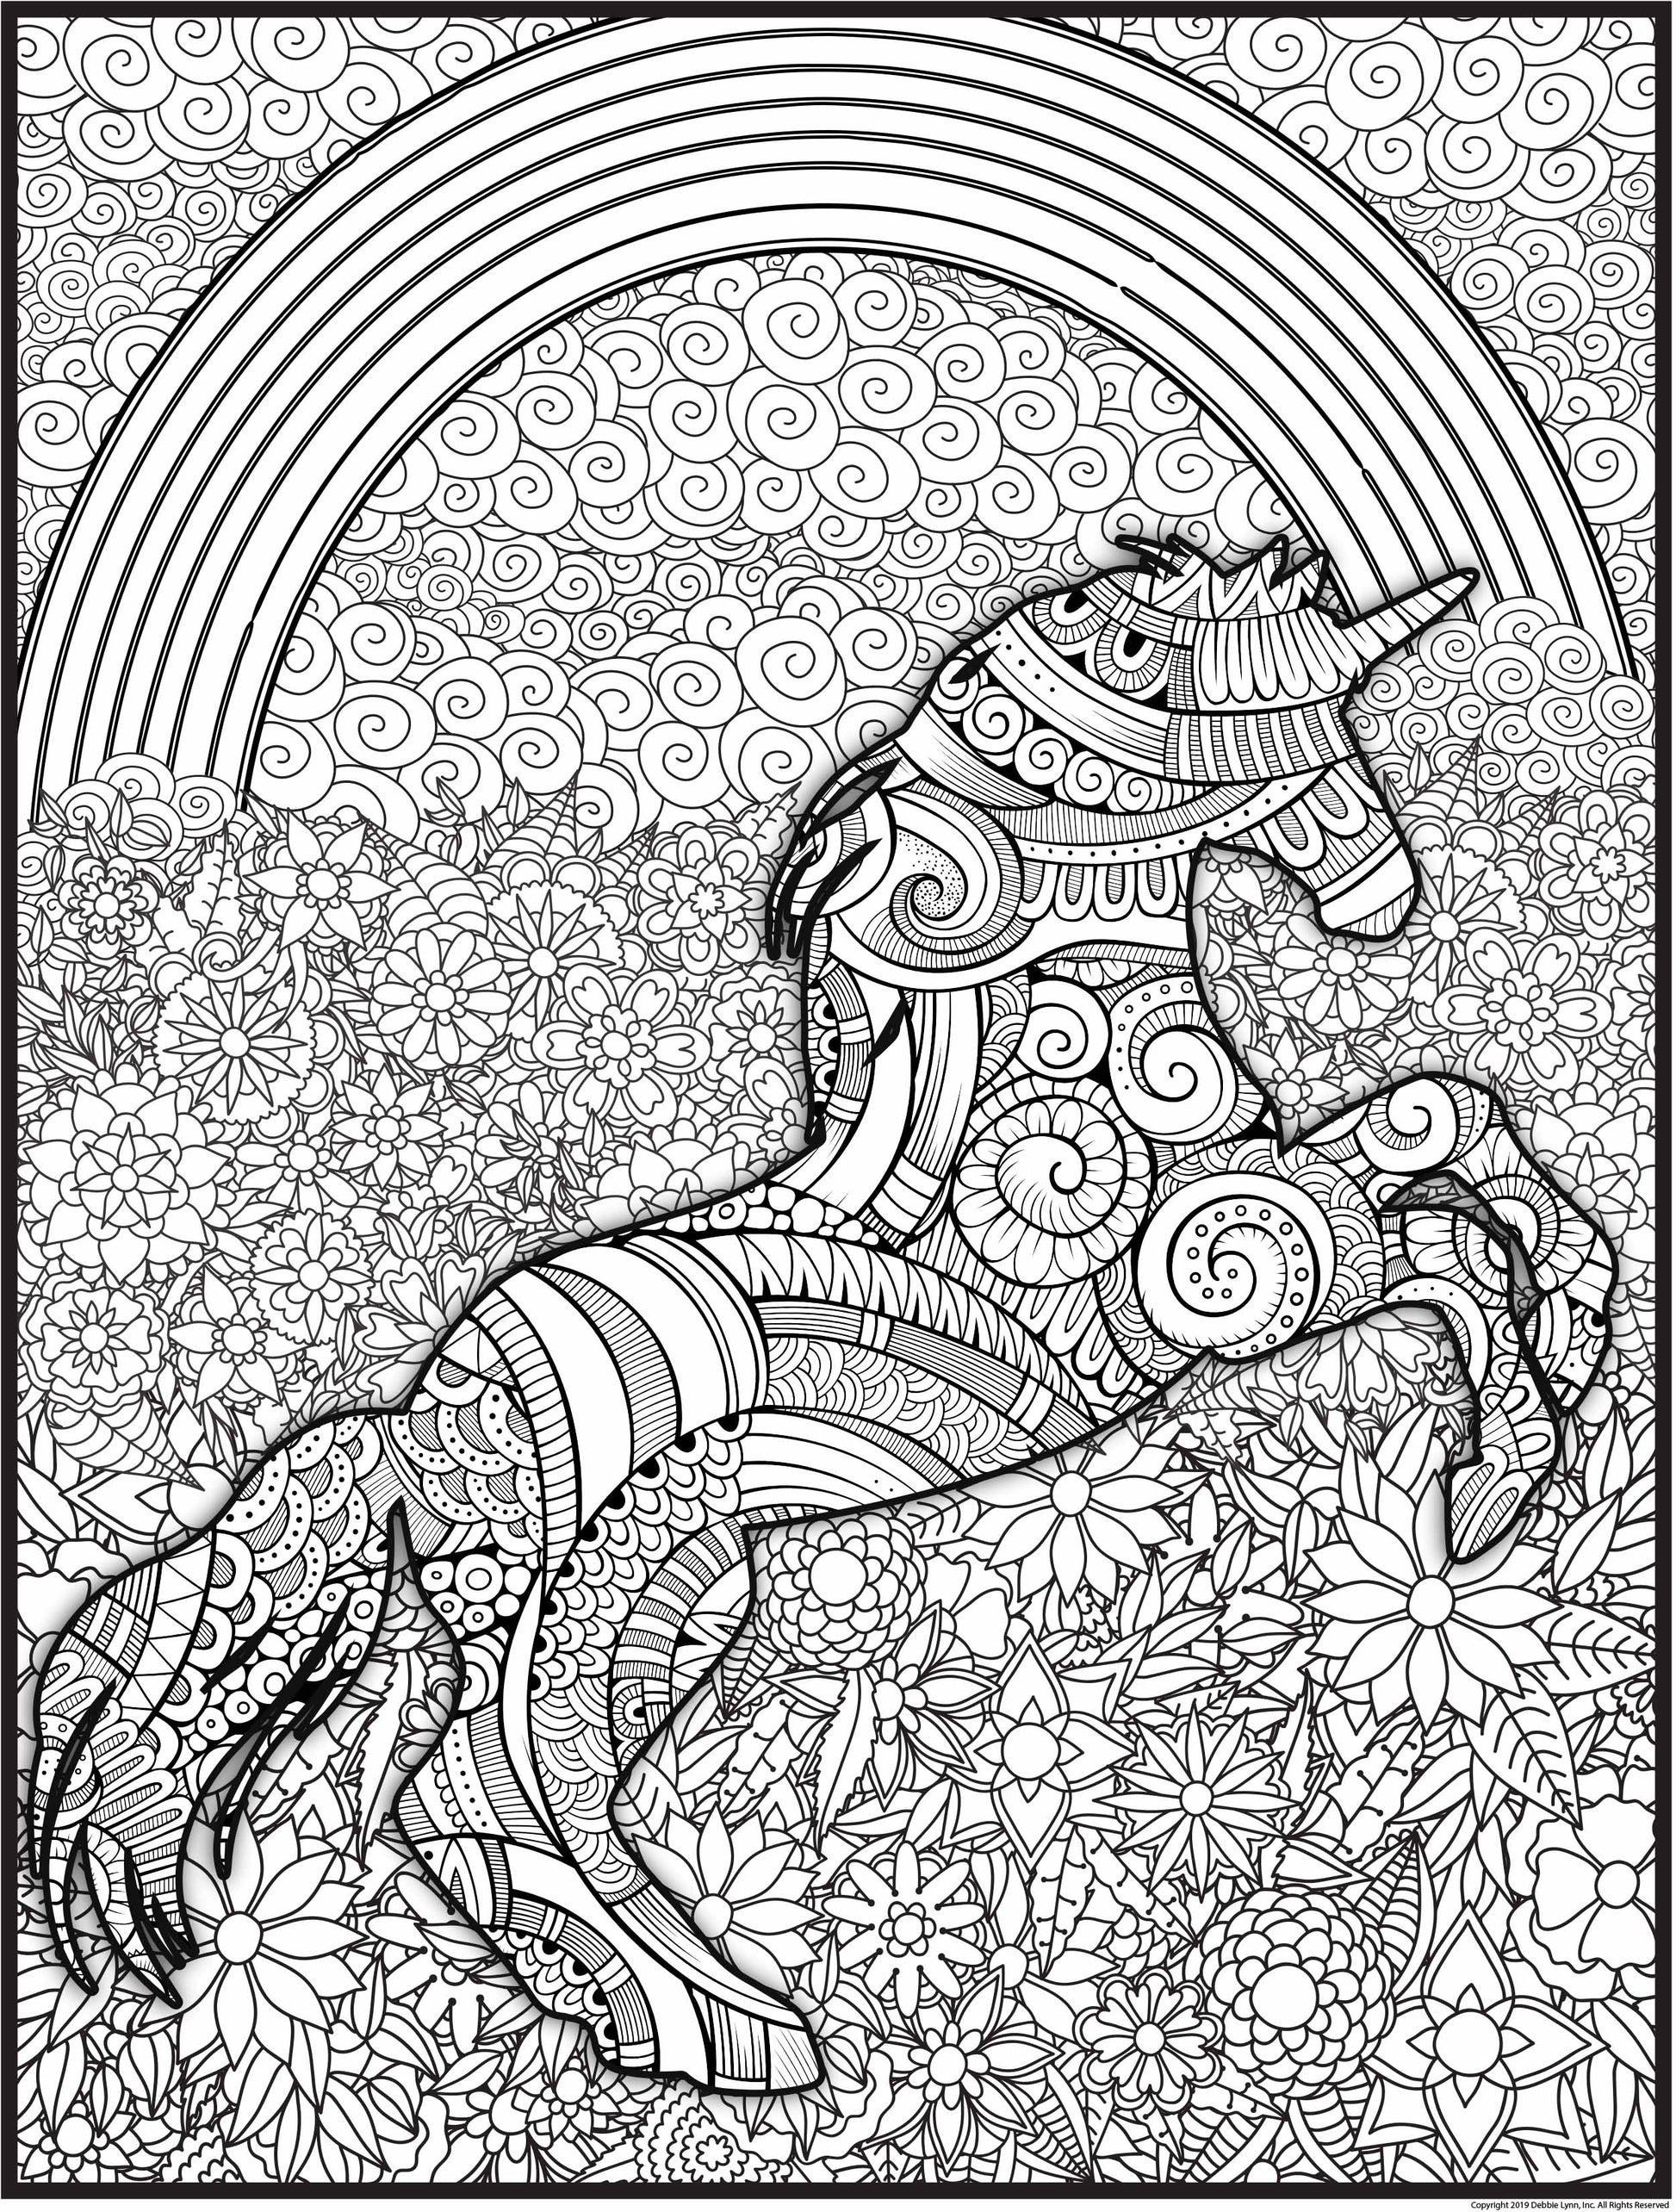 Unicorn Drawing Poster